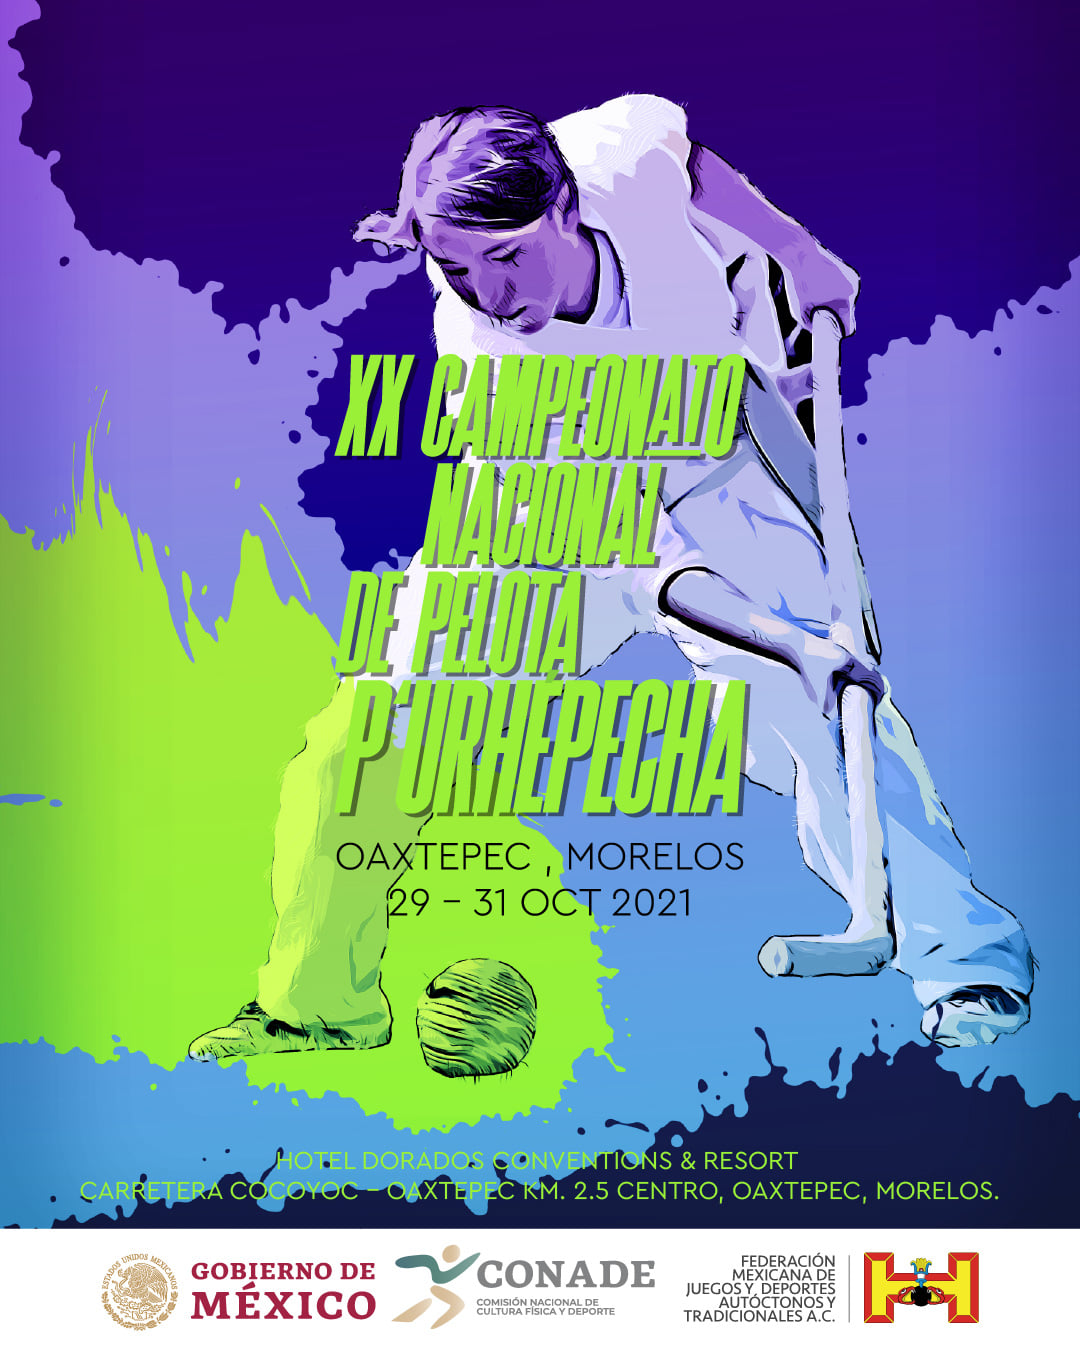 XX Campeonato Nacional de Pelota P’urhepecha